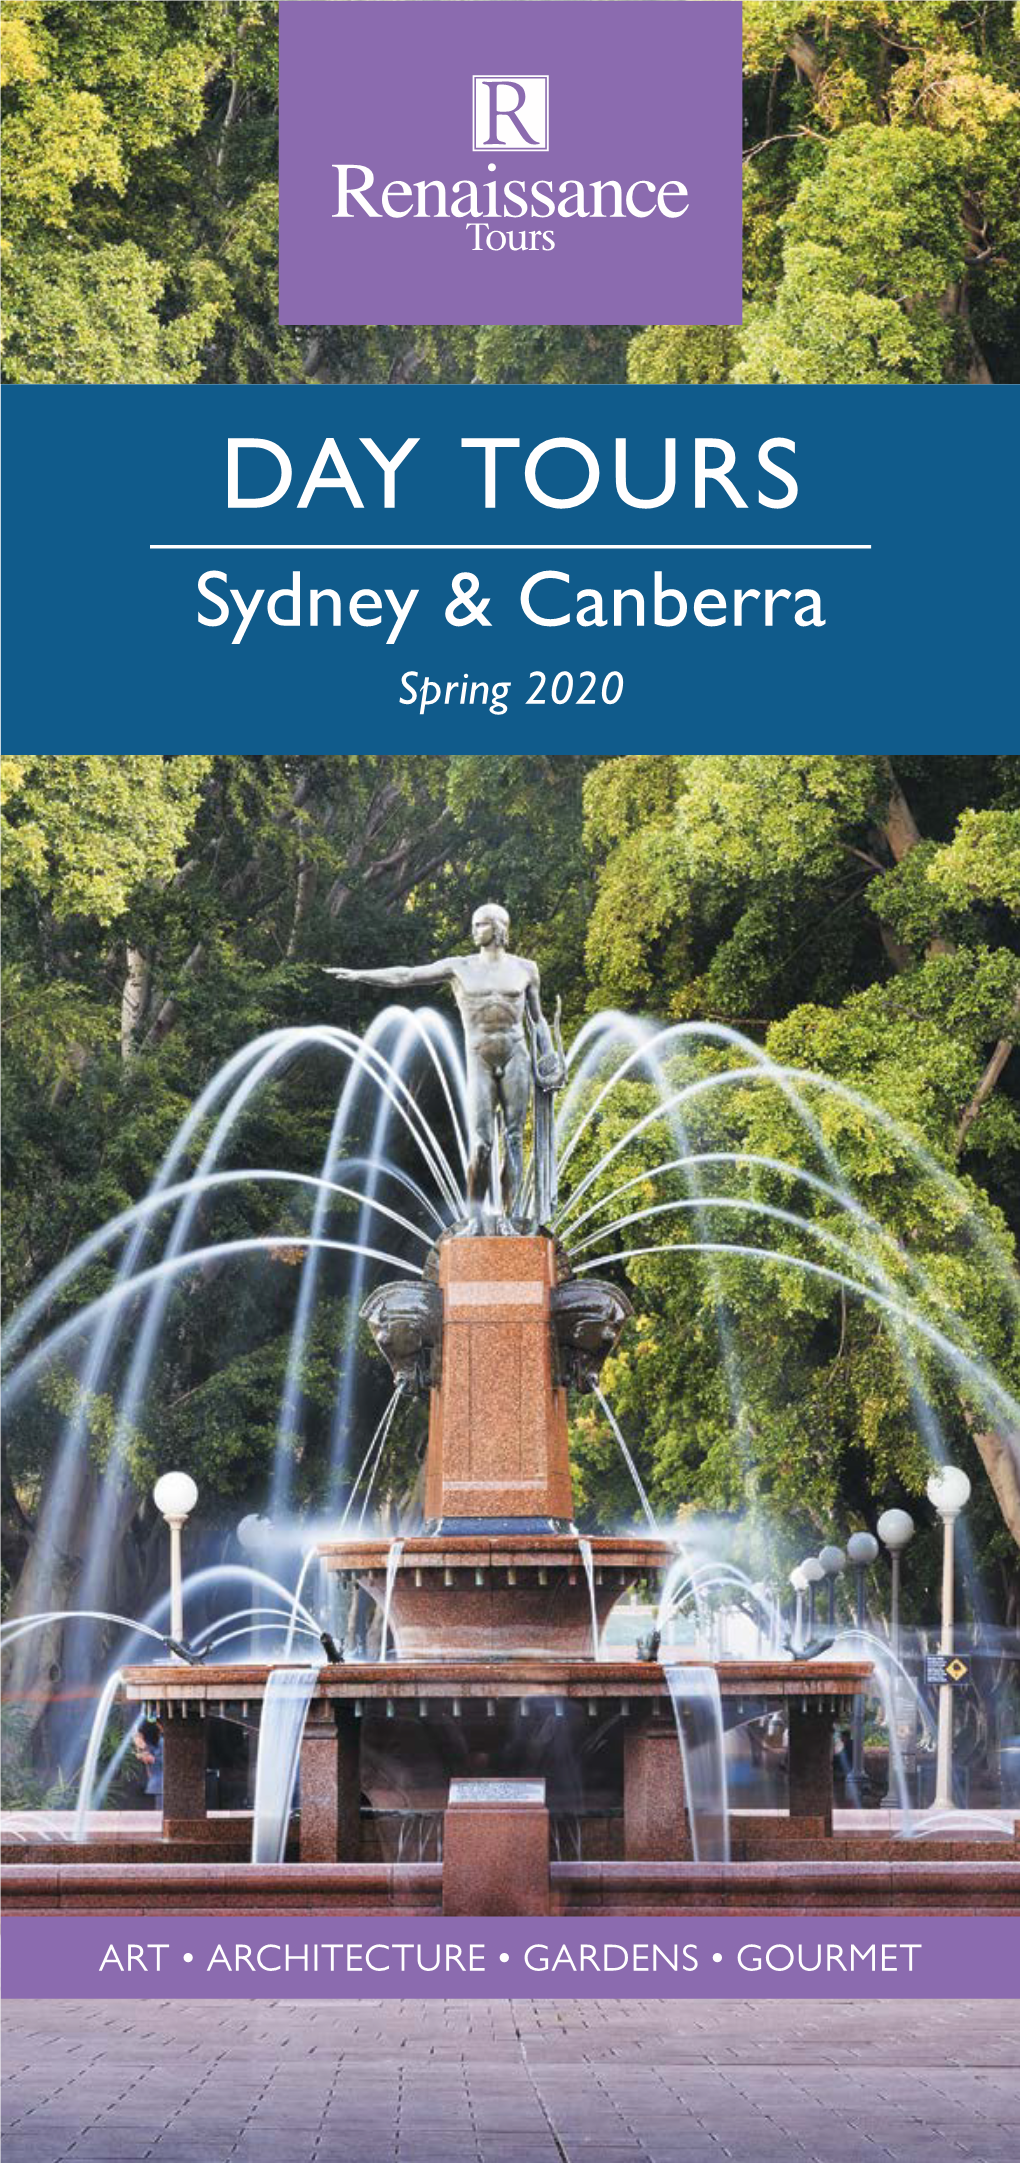 DAY TOURS Sydney & Canberra Spring 2020